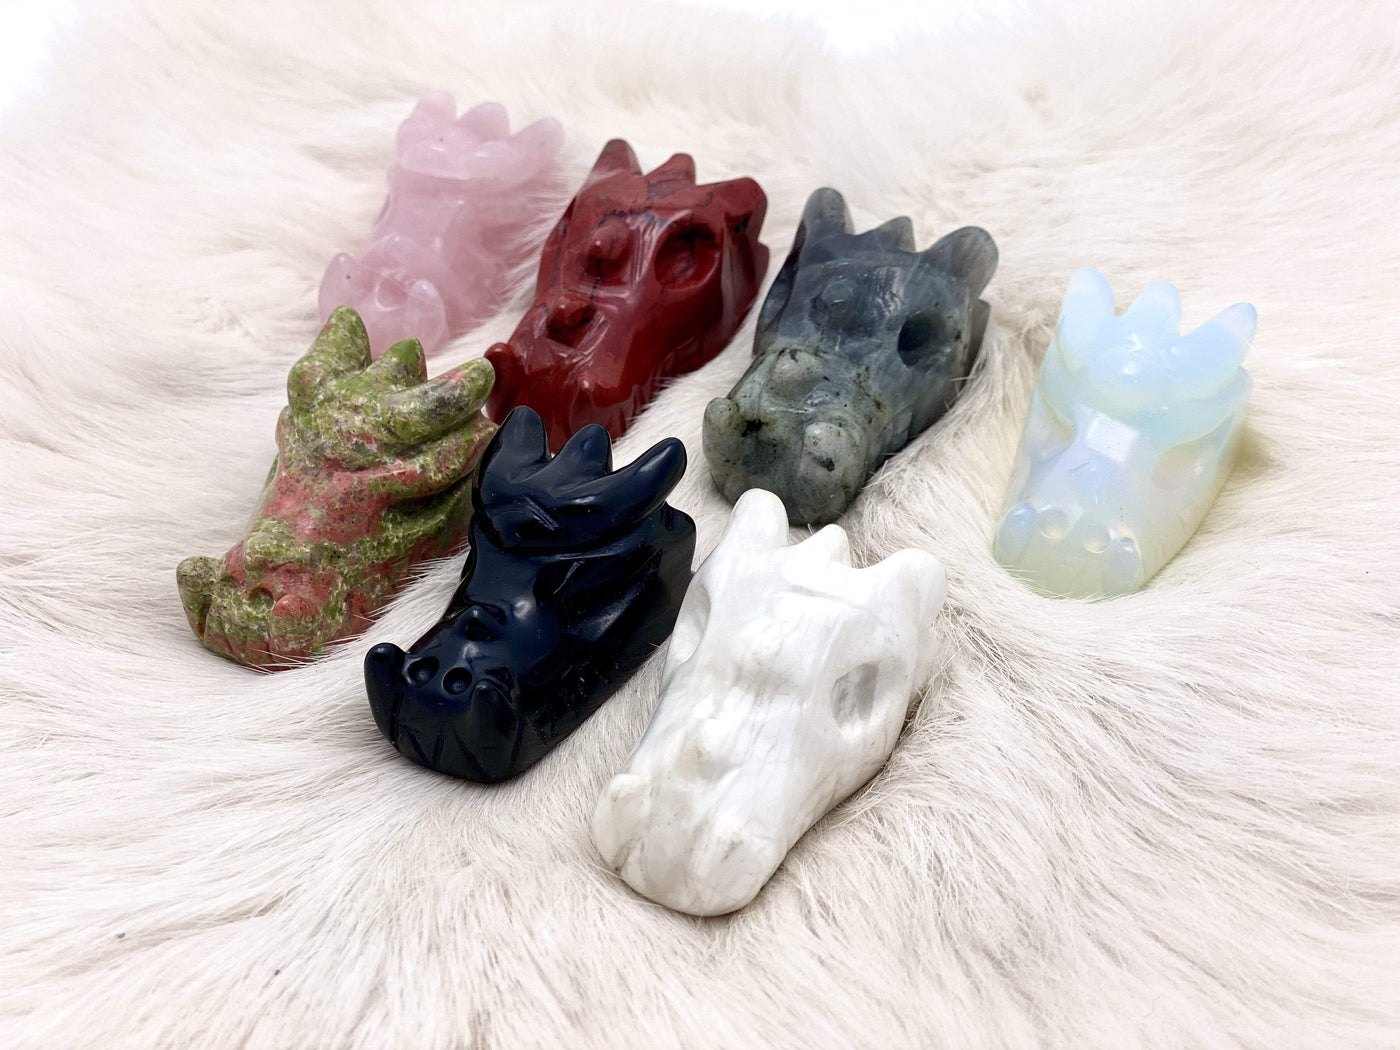 7 Different Dragon Head Mini Statues on White Furry Carpet.